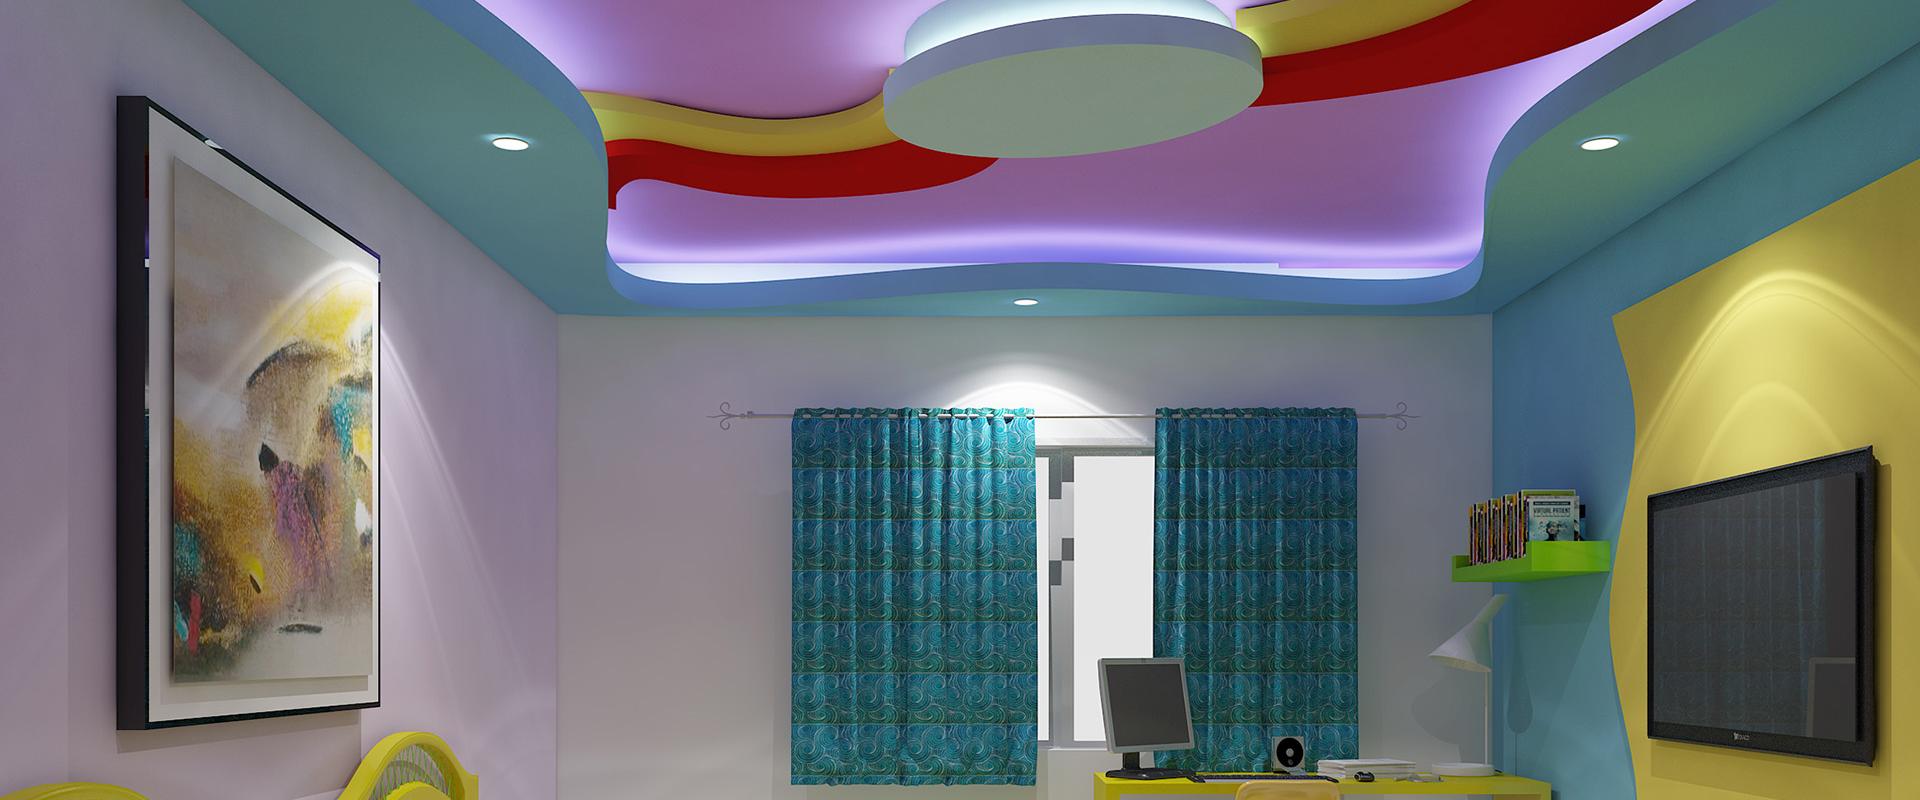 10 - False Ceiling Colour Ideas - HD Wallpaper 